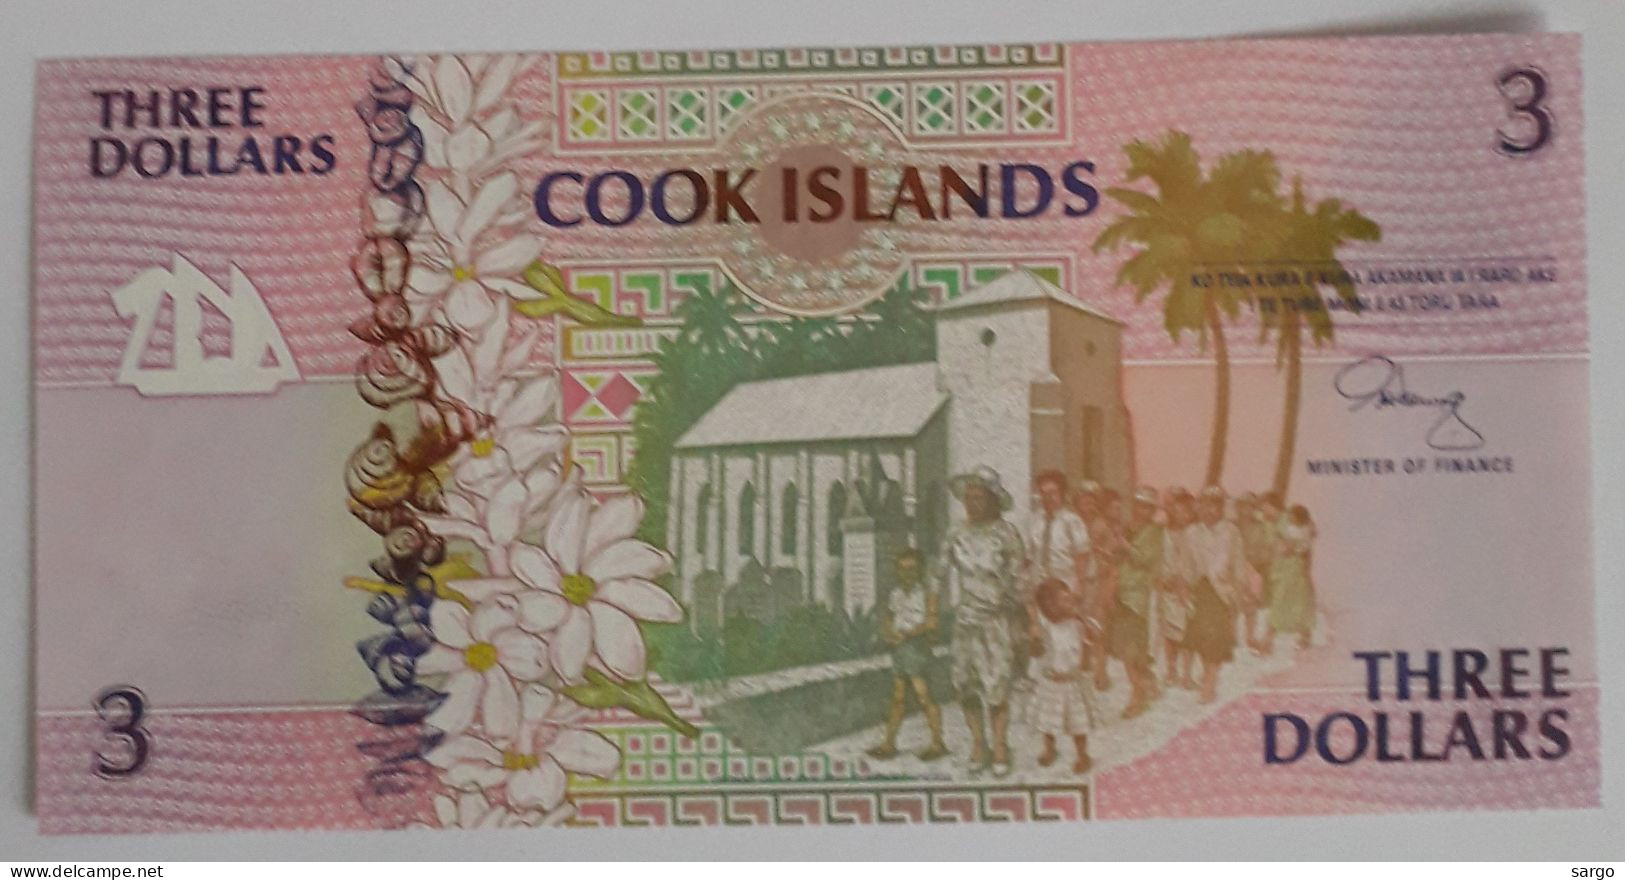 COOK ISLANDS - AITUTAKI - 3 DOLLARS - 1992 - UNC - P 7  - BANKNOTES - PAPER MONEY - CARTAMONETA - - Cookeilanden